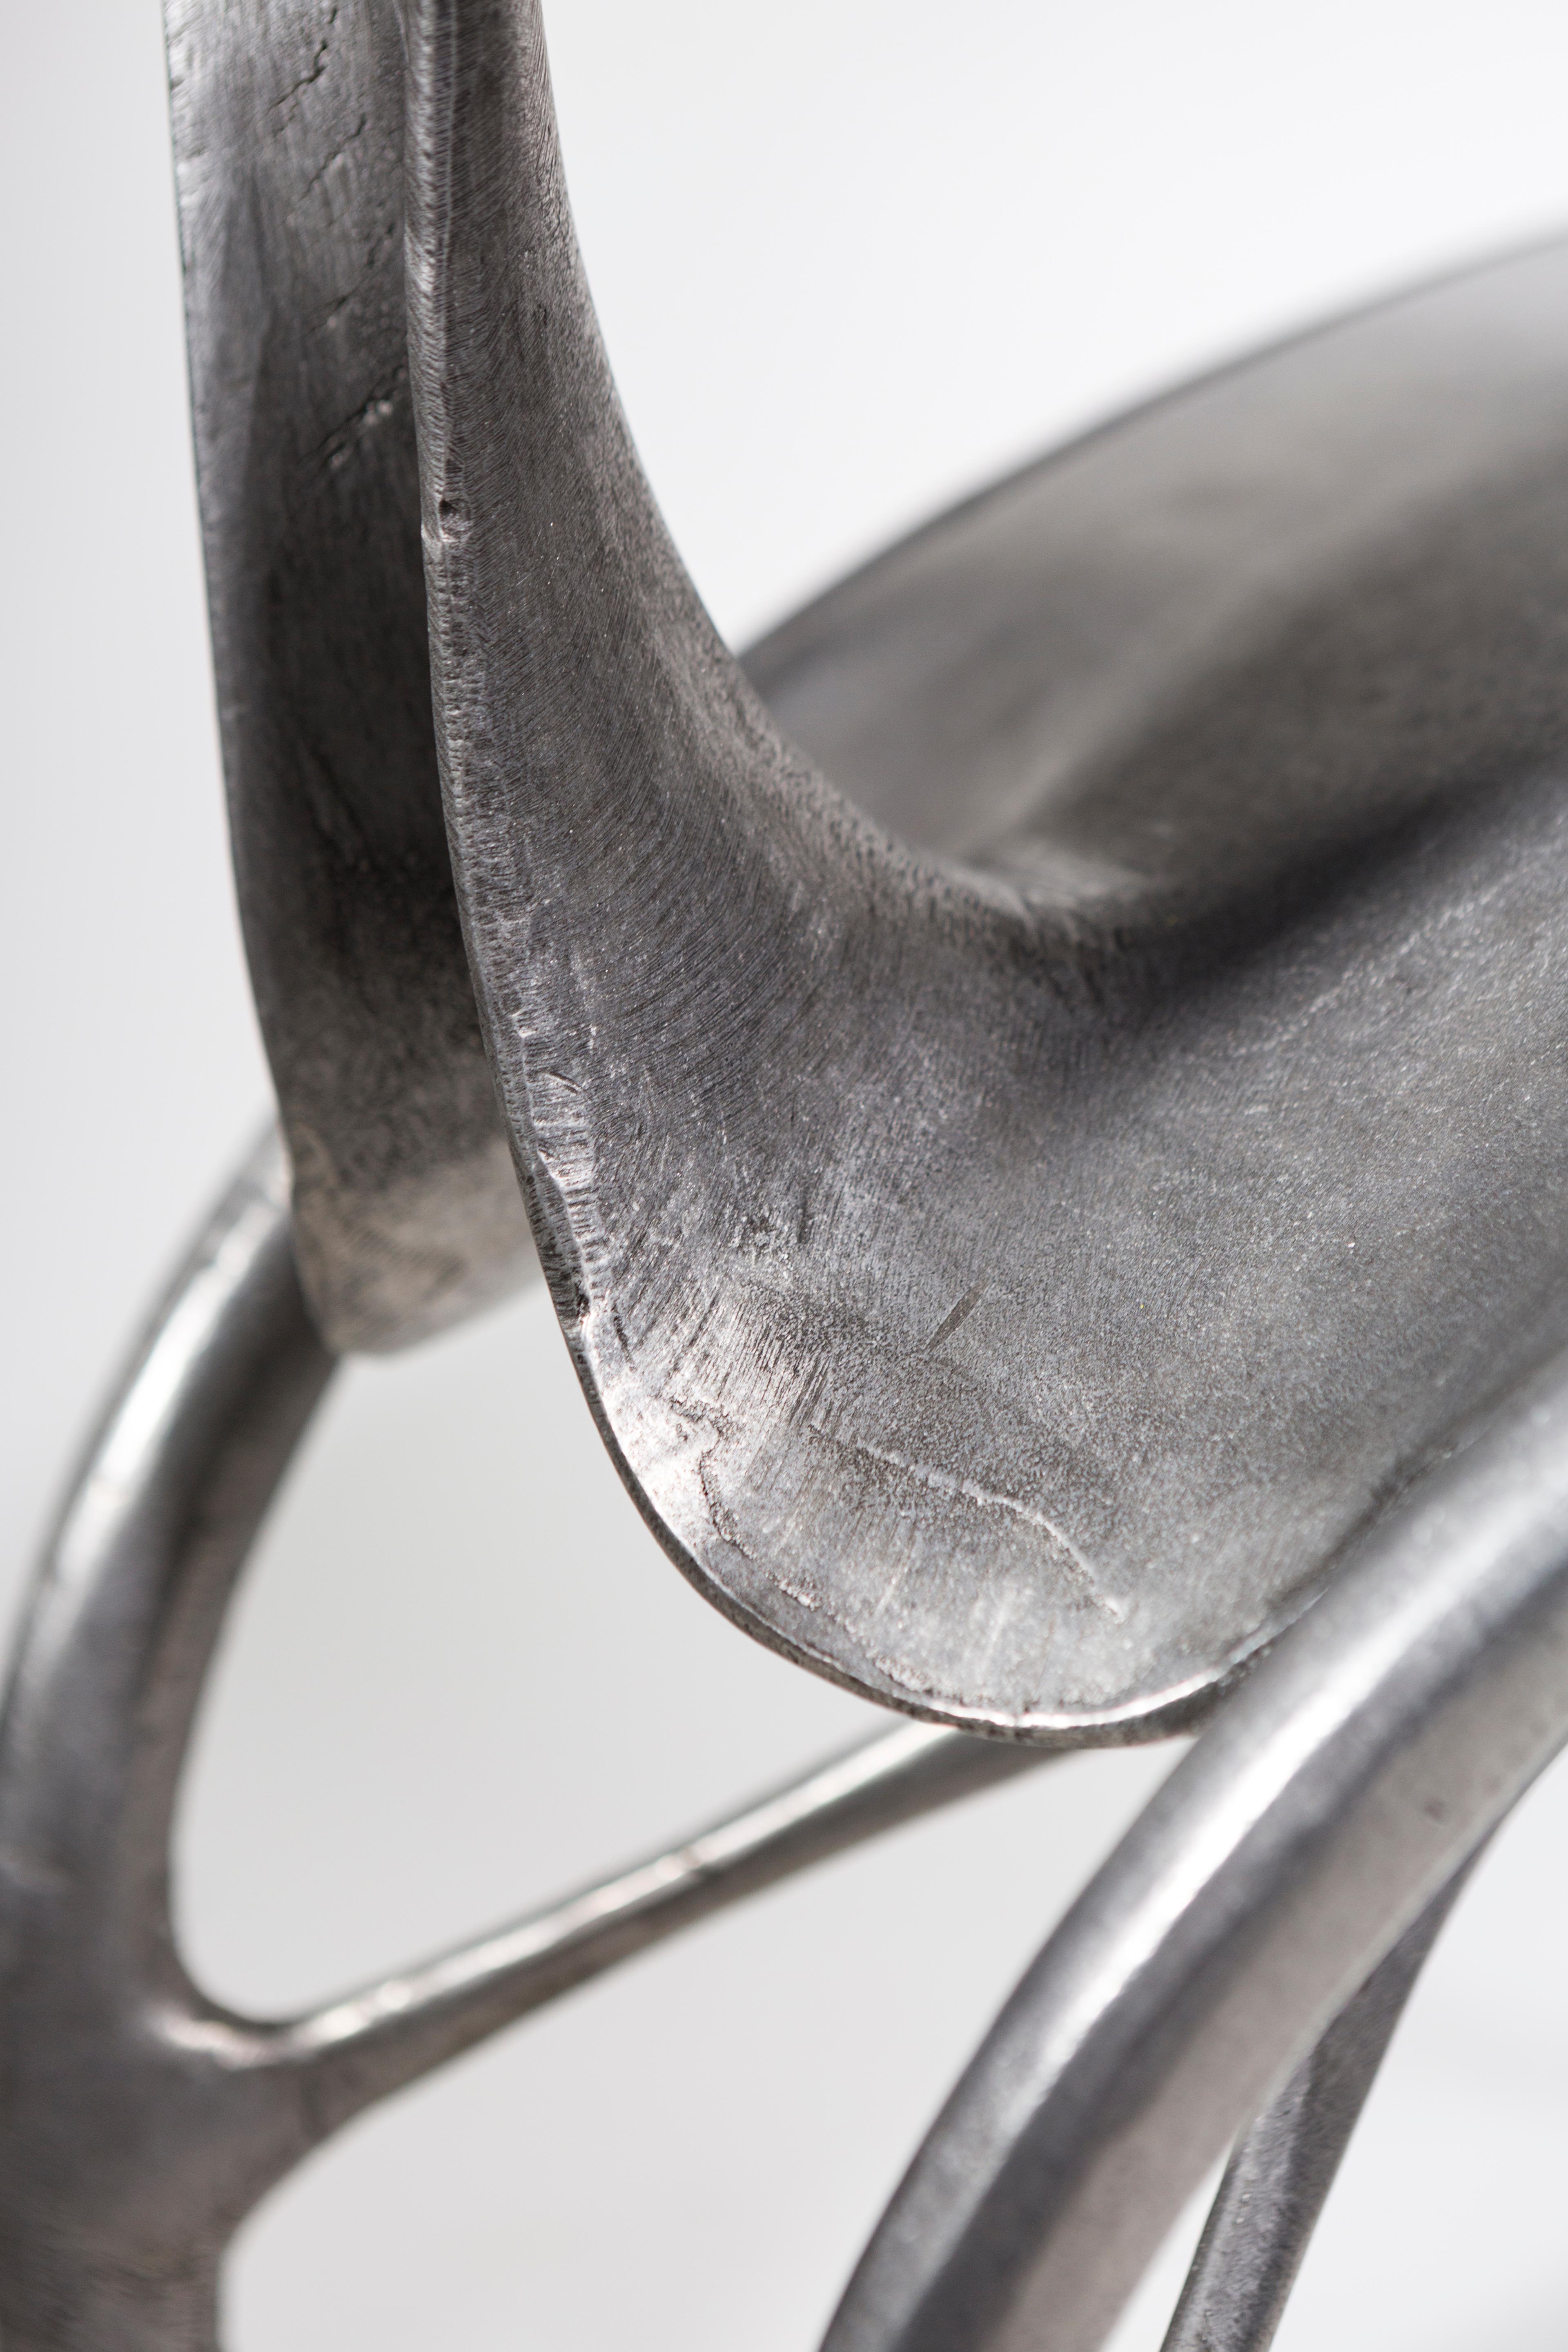 Hoodie Side Chair, Hand-Carved/Cast Aluminum, Jordan Mozer, USA, 2018 For Sale 2